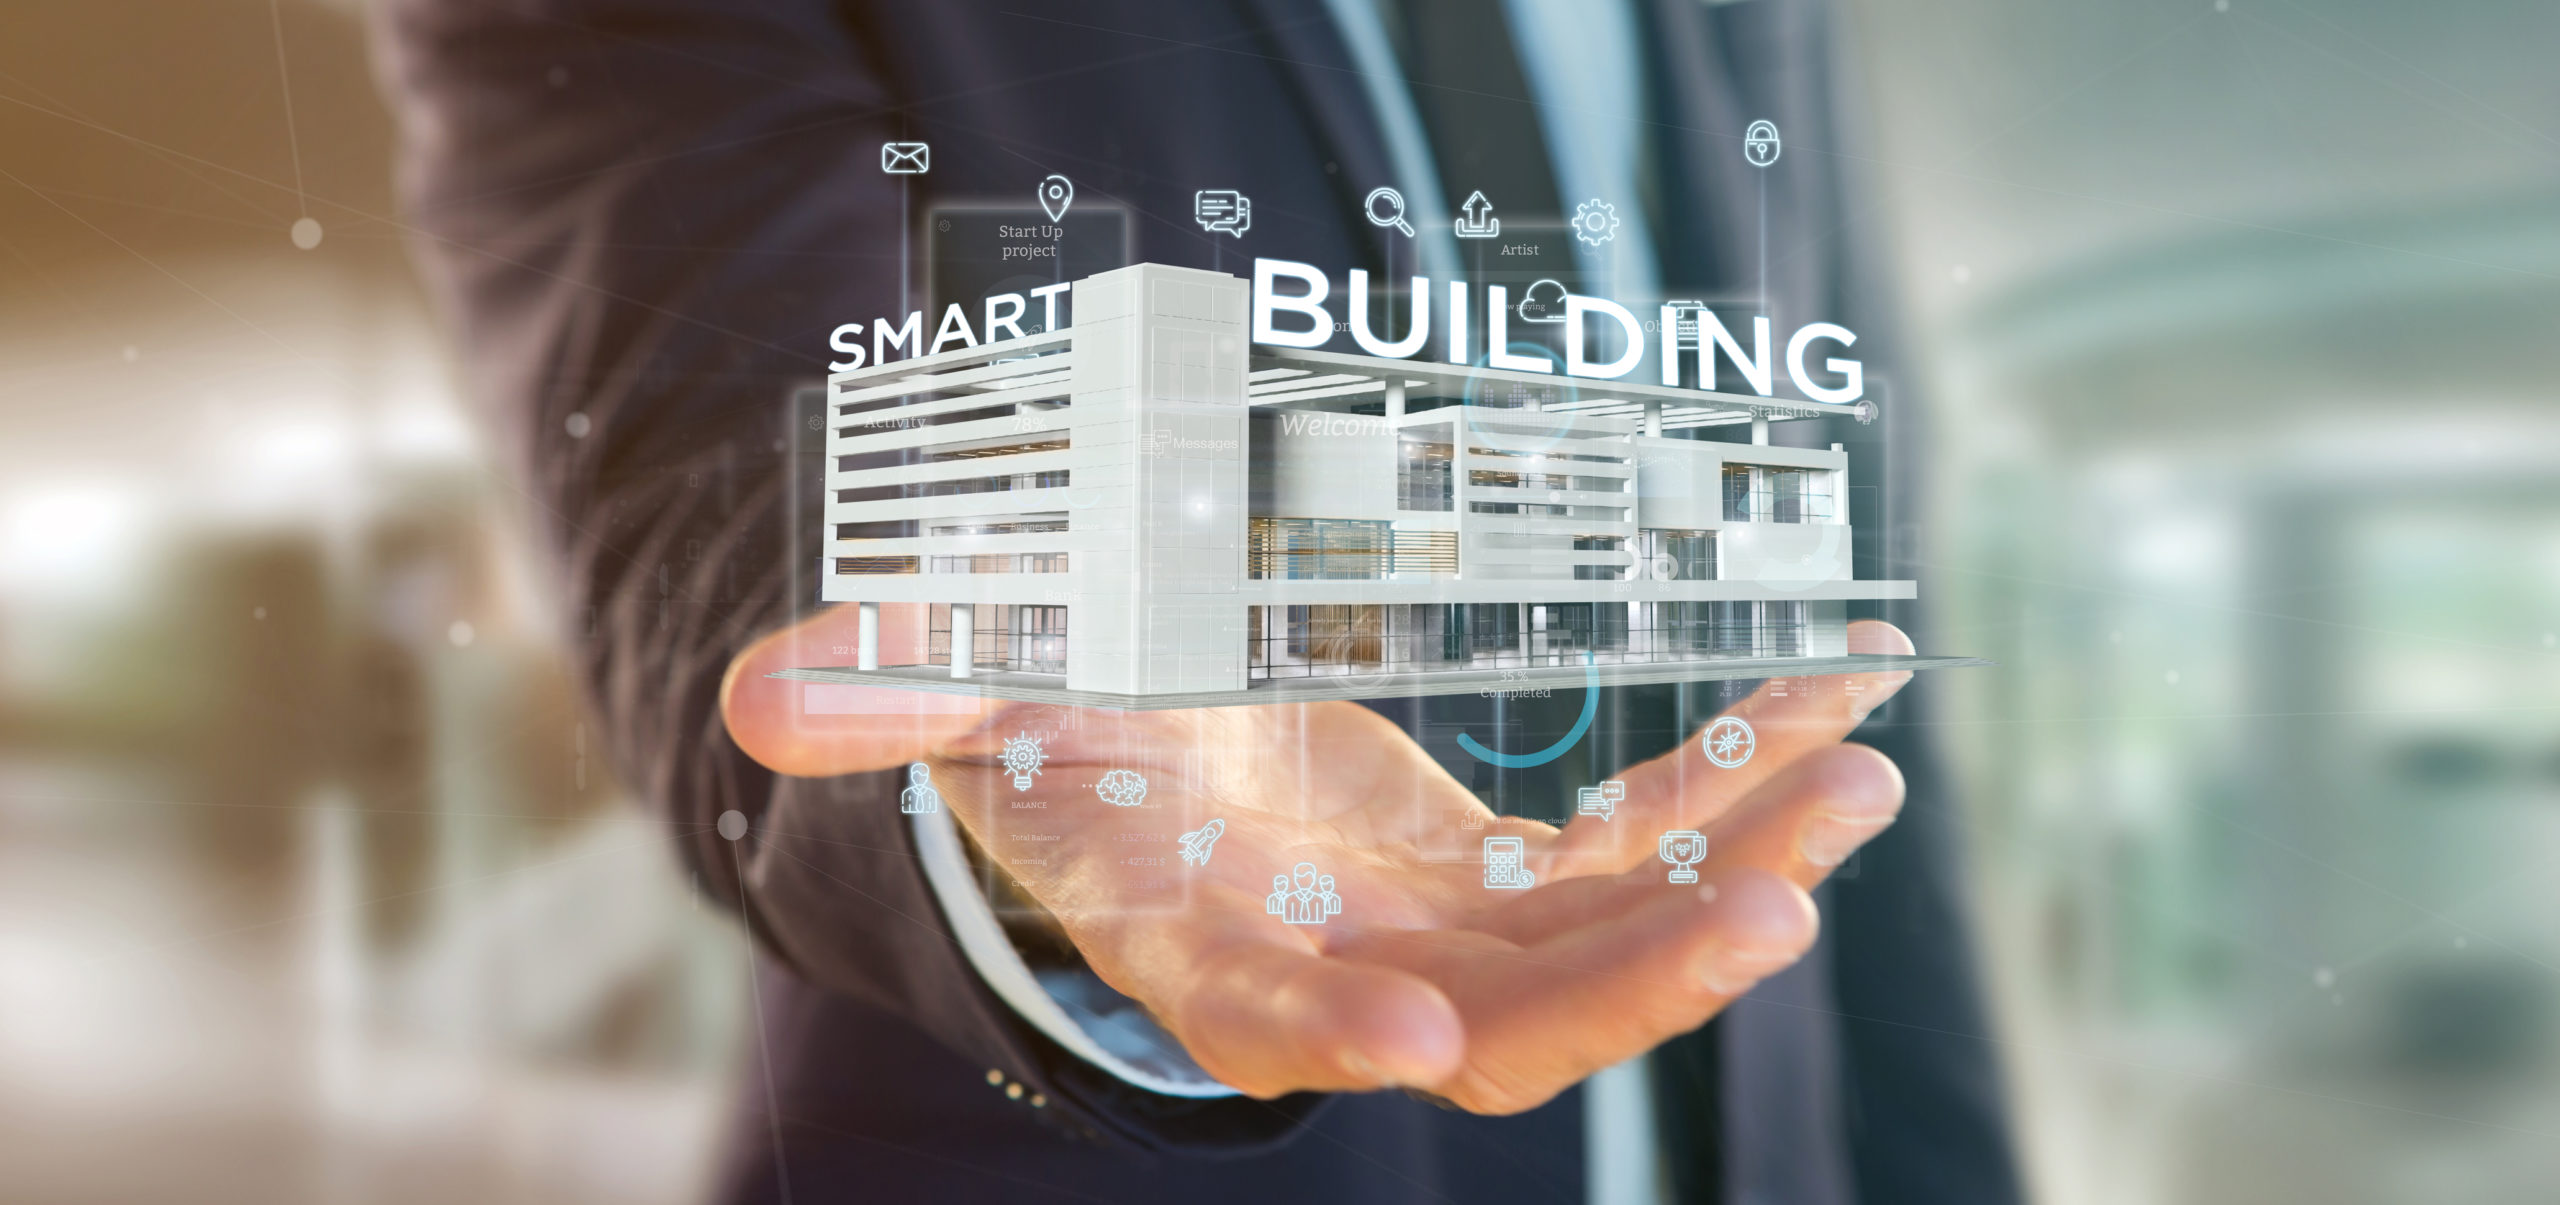 The Smart Building Revolution